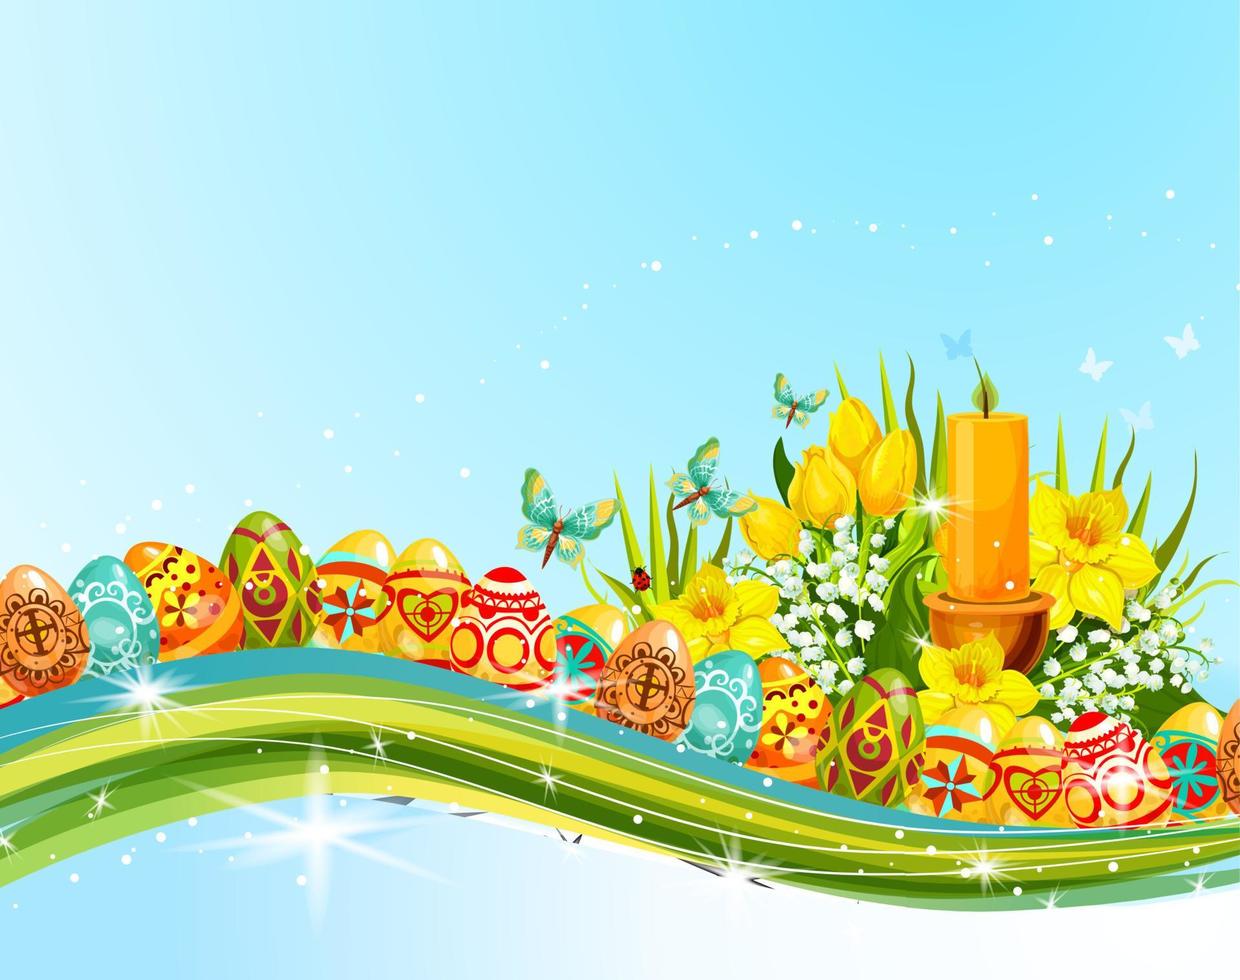 Easter egg and flower banner for holiday design vector